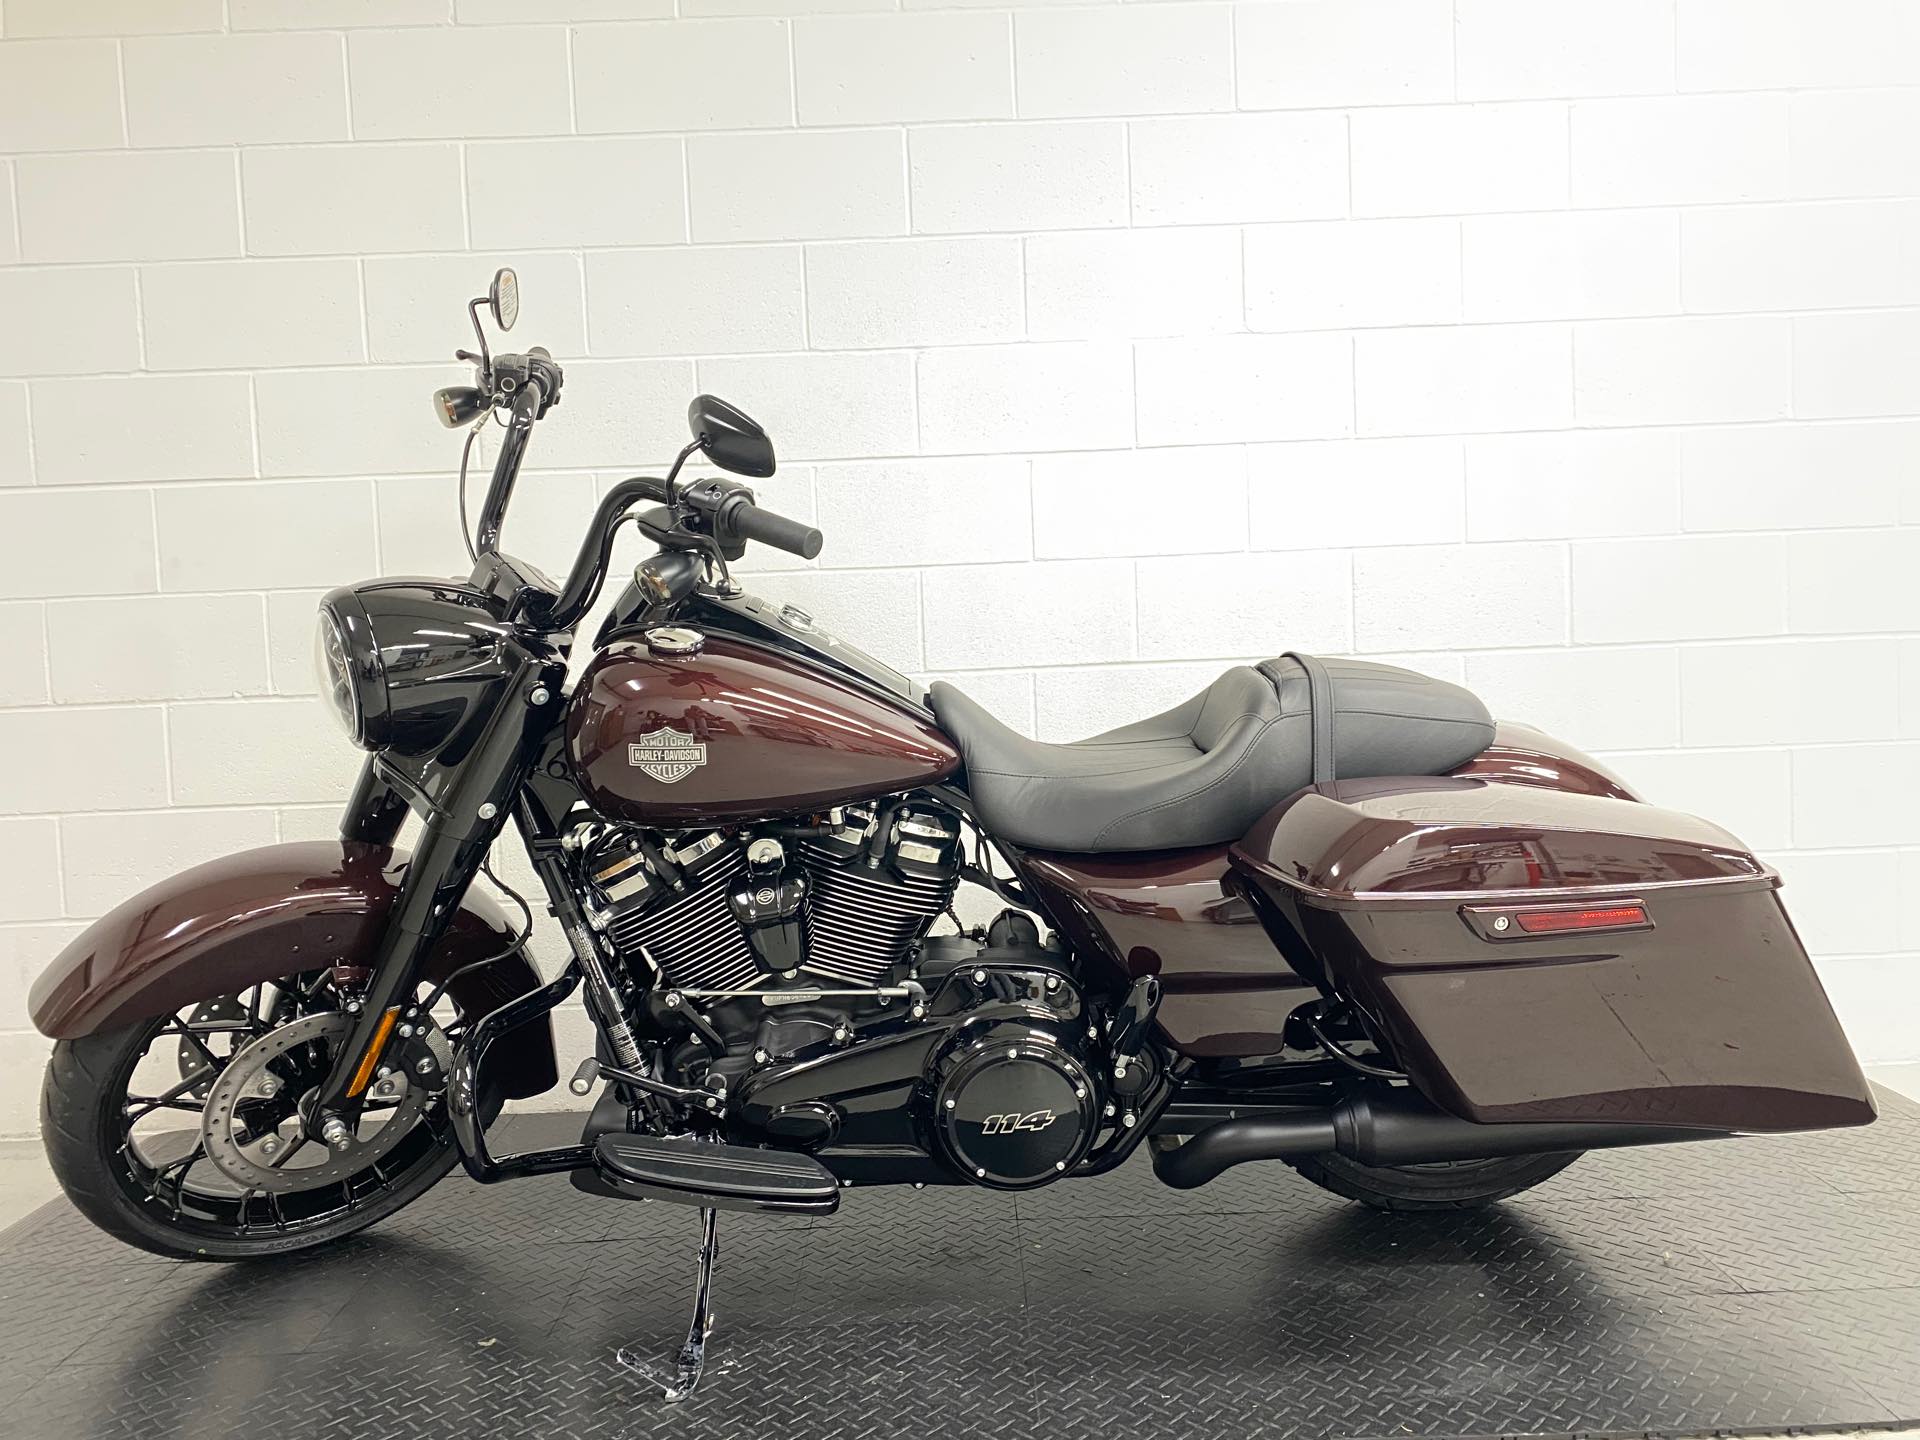 2022 Harley-Davidson Road King Special Special at Destination Harley-Davidson®, Silverdale, WA 98383